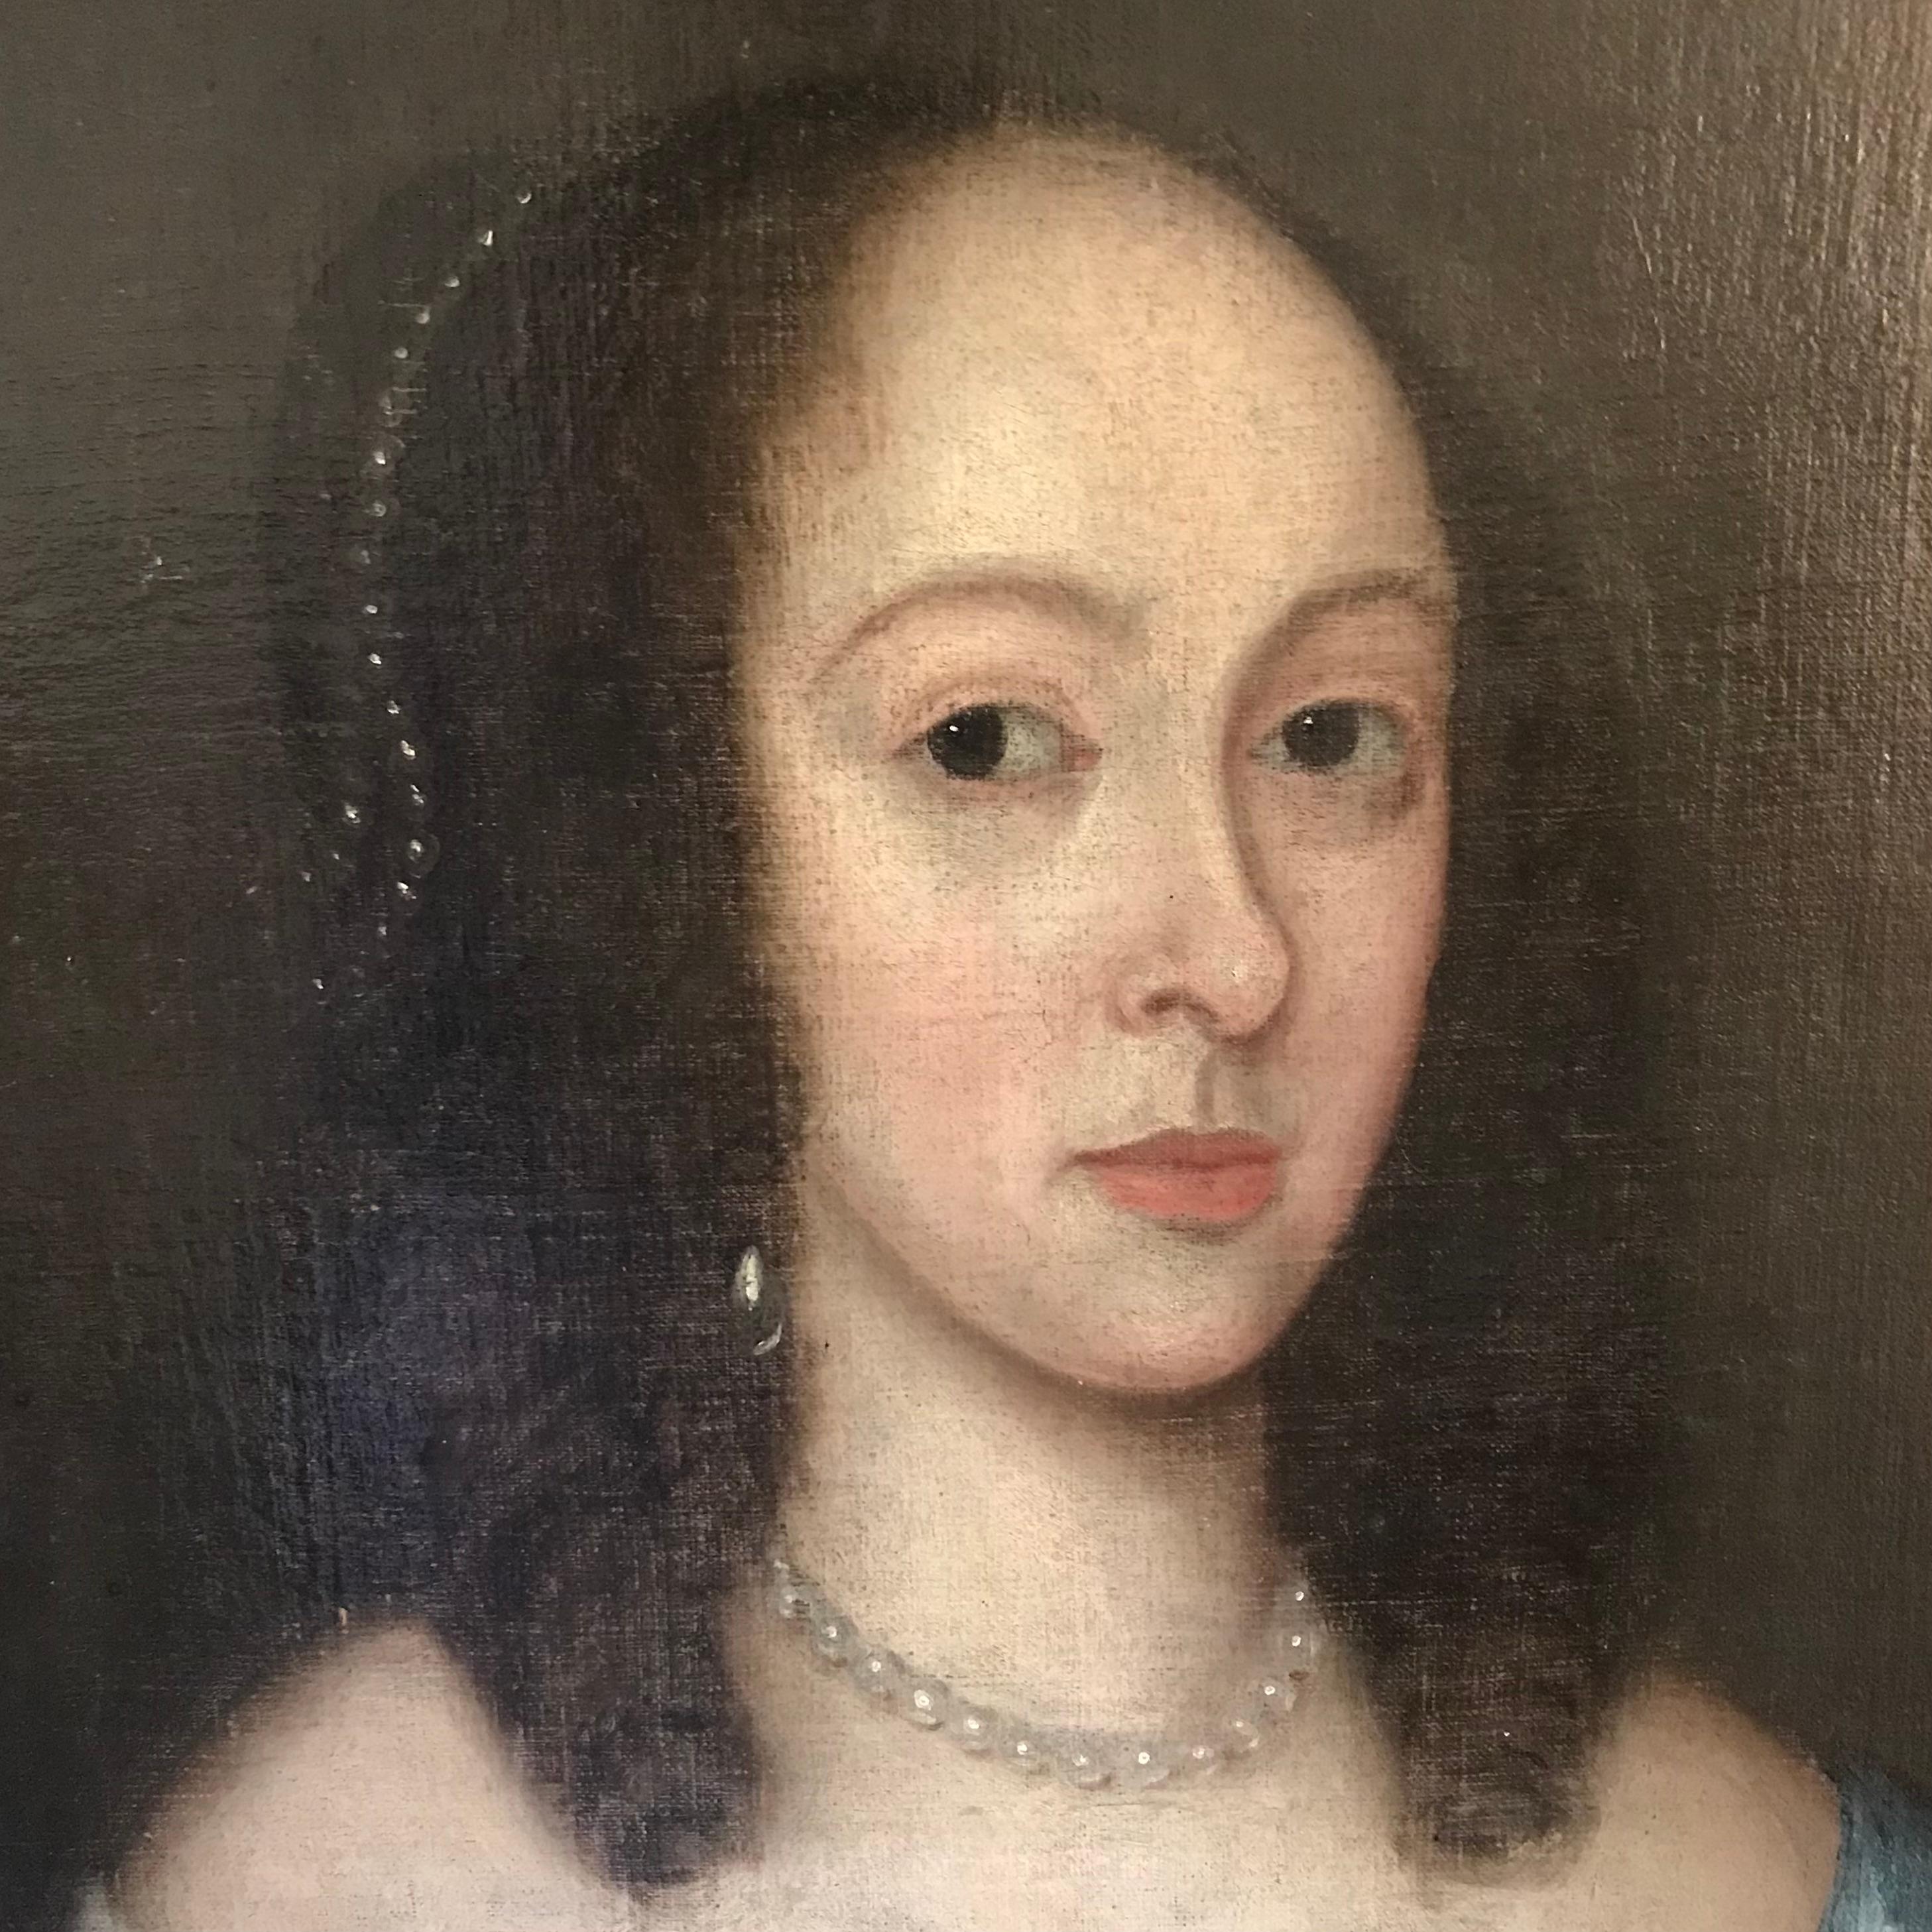 17th century portraits for sale